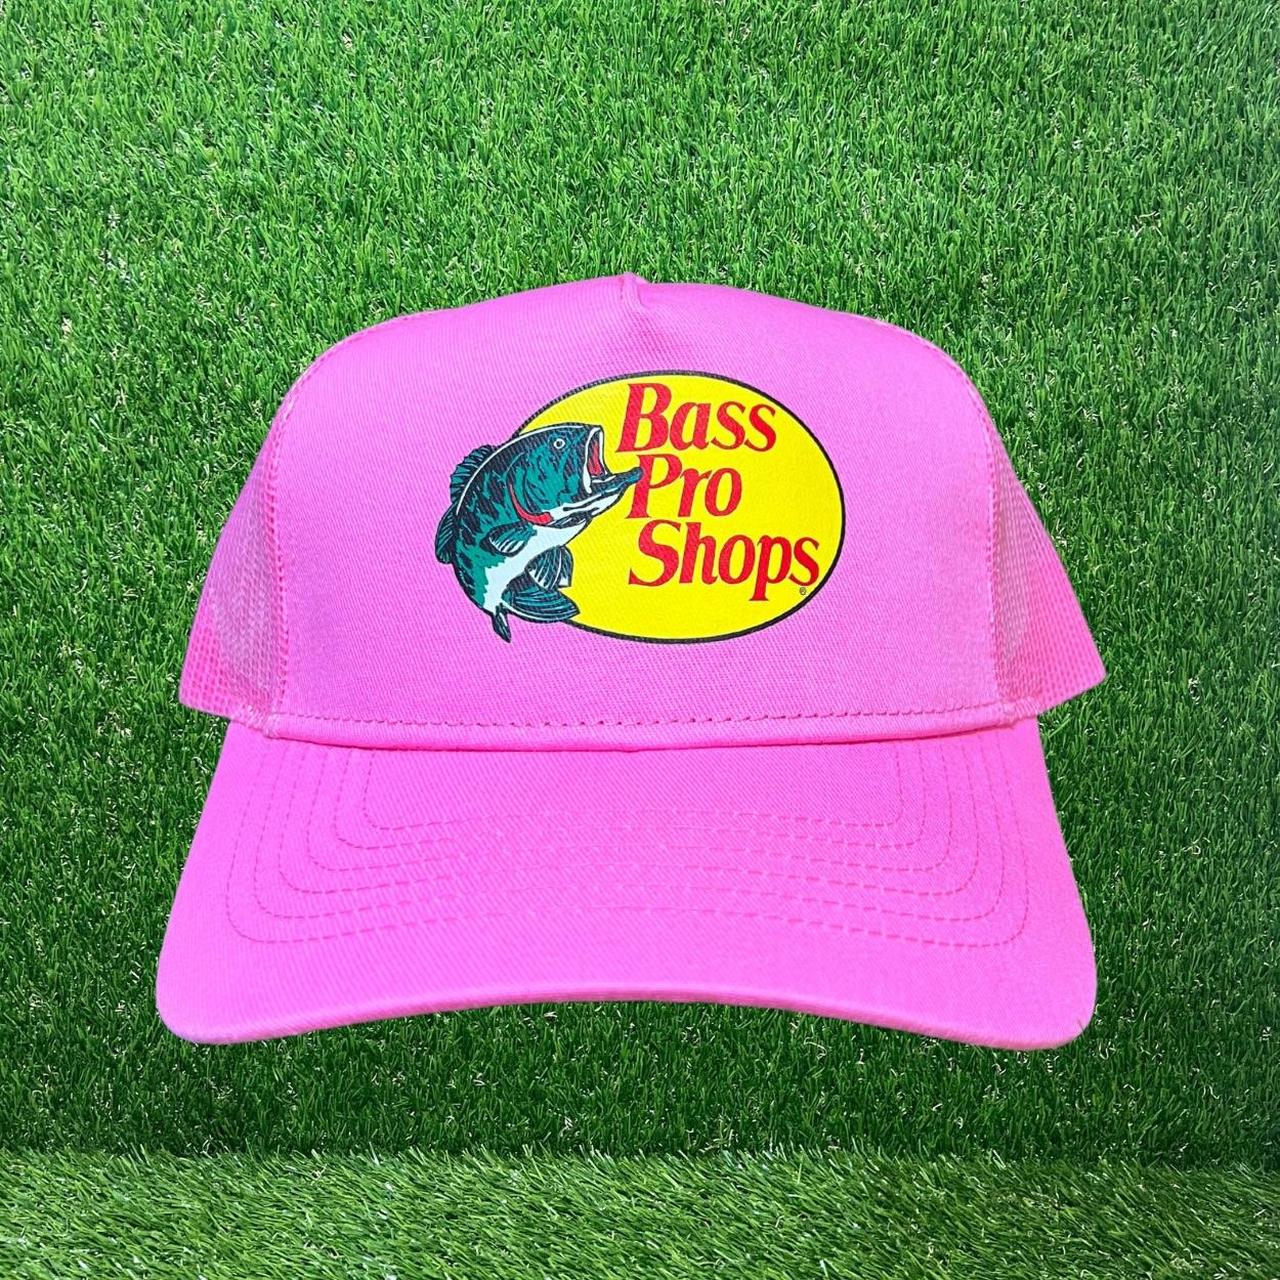 Bass Pro Shops Kids' Hat - Pink